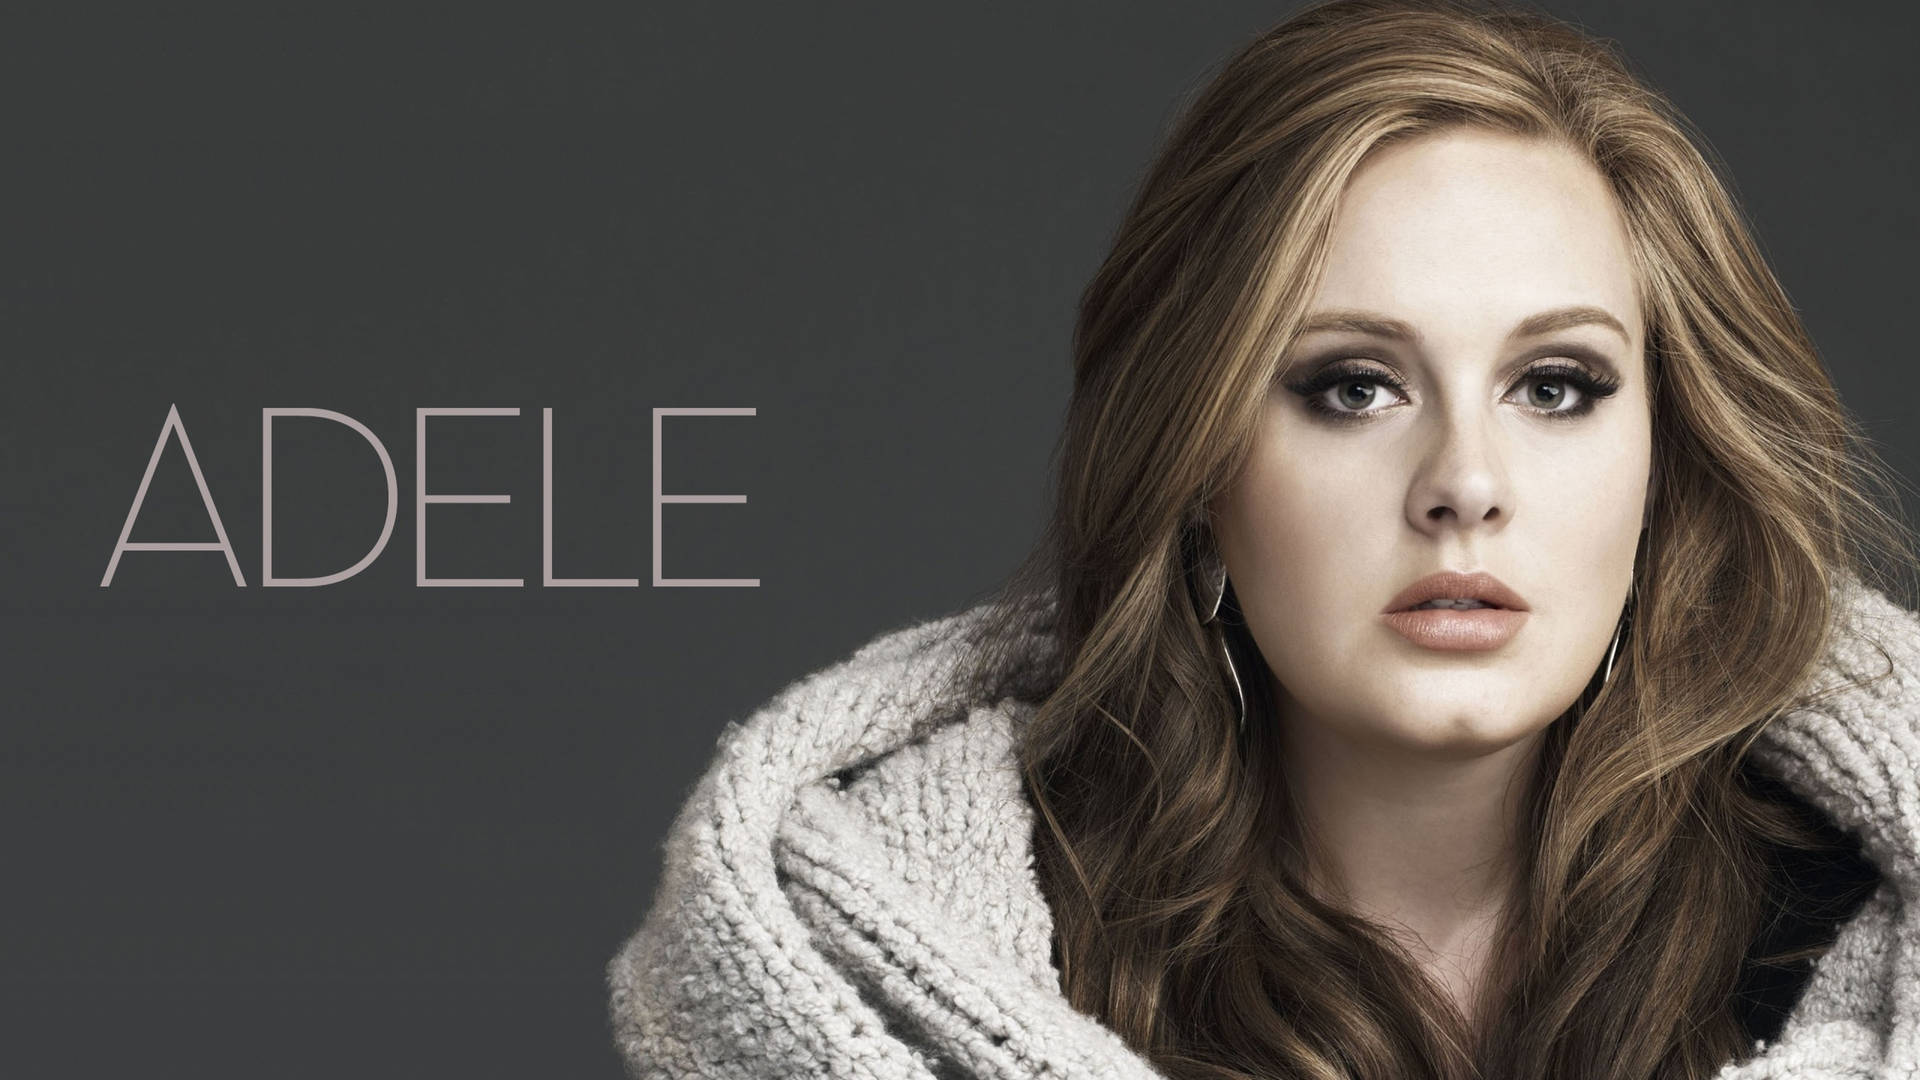 Adele 25 Album Photoshoot Wallpaper